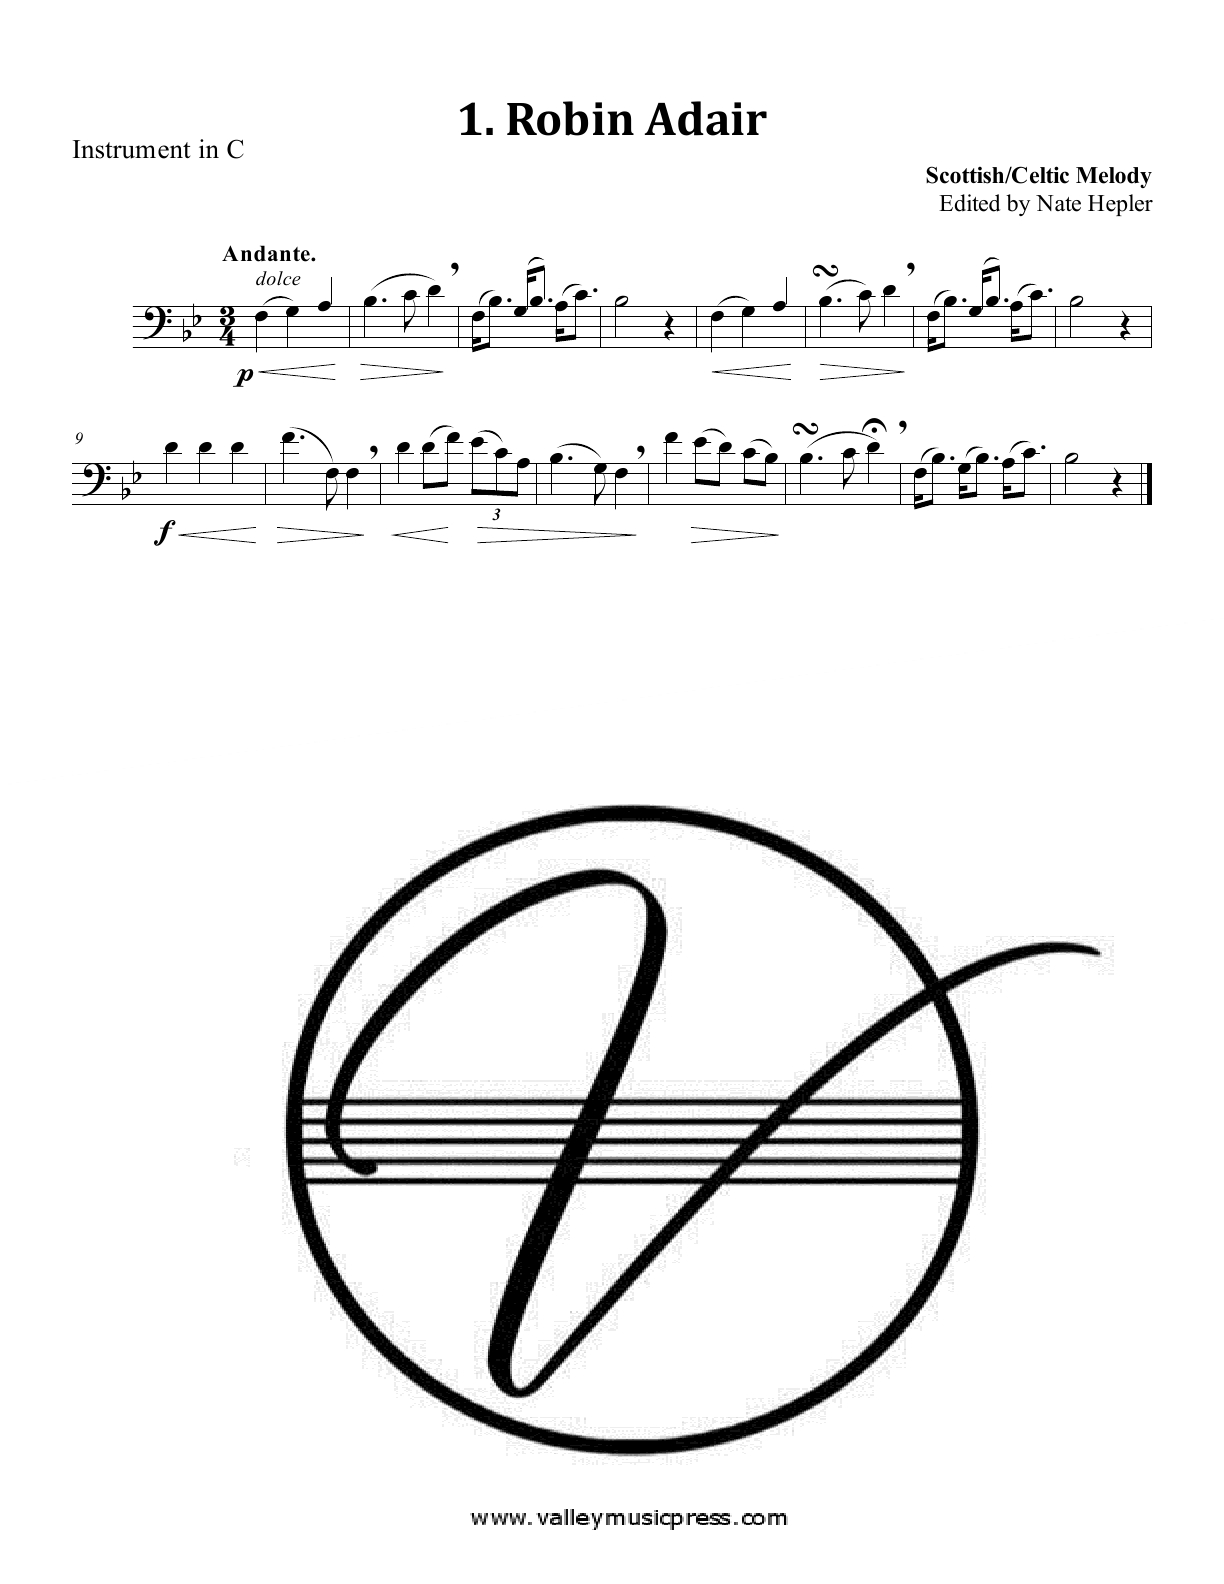 Arban Art of Phrasing Piano Accompaniment Vol. 3 No. 51-75 (Trb)